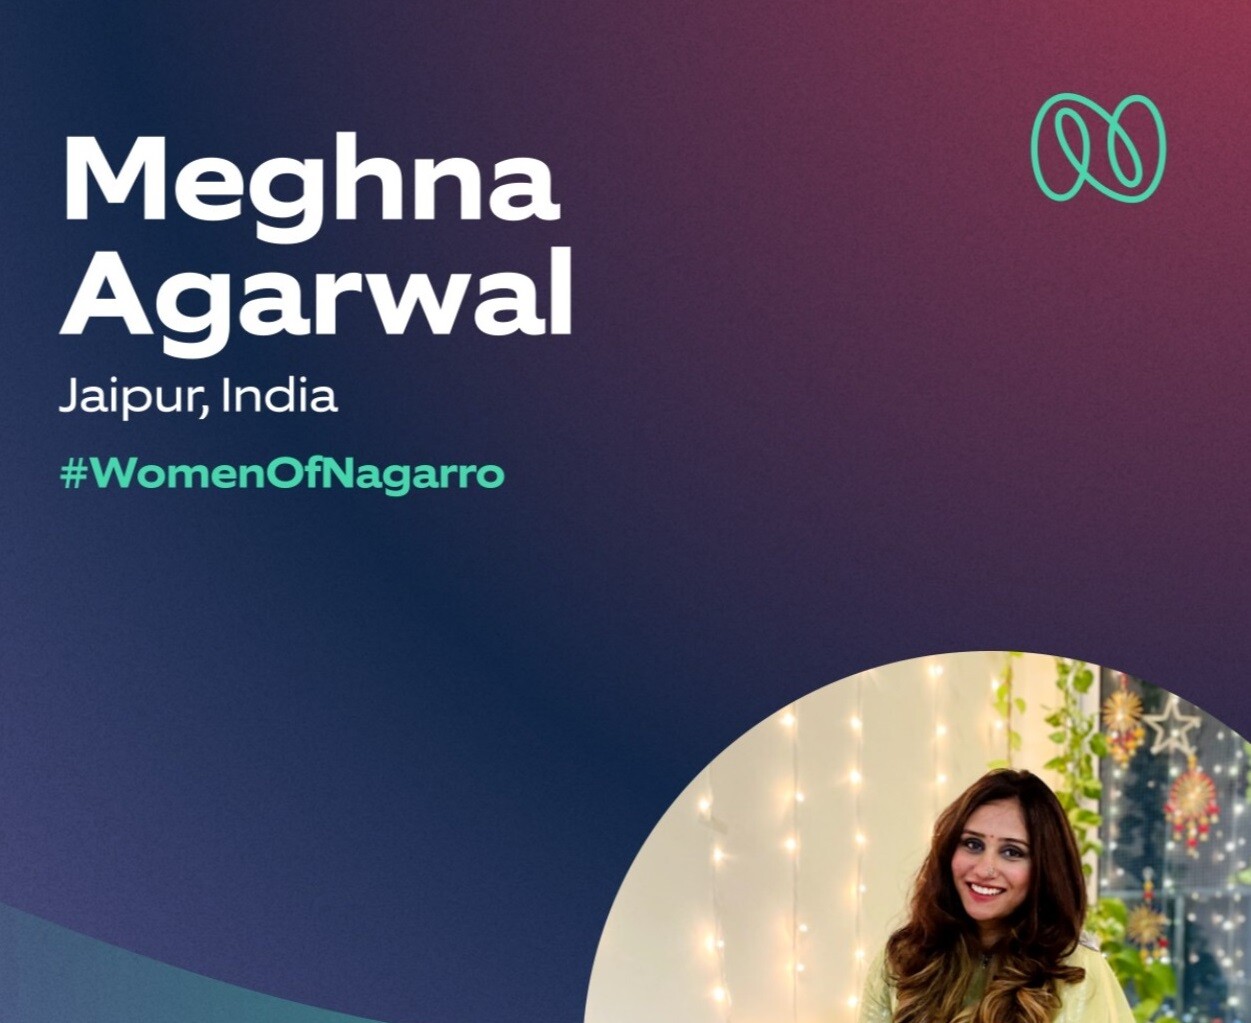 Meghna-Agarwal-Women-of-Nagarro